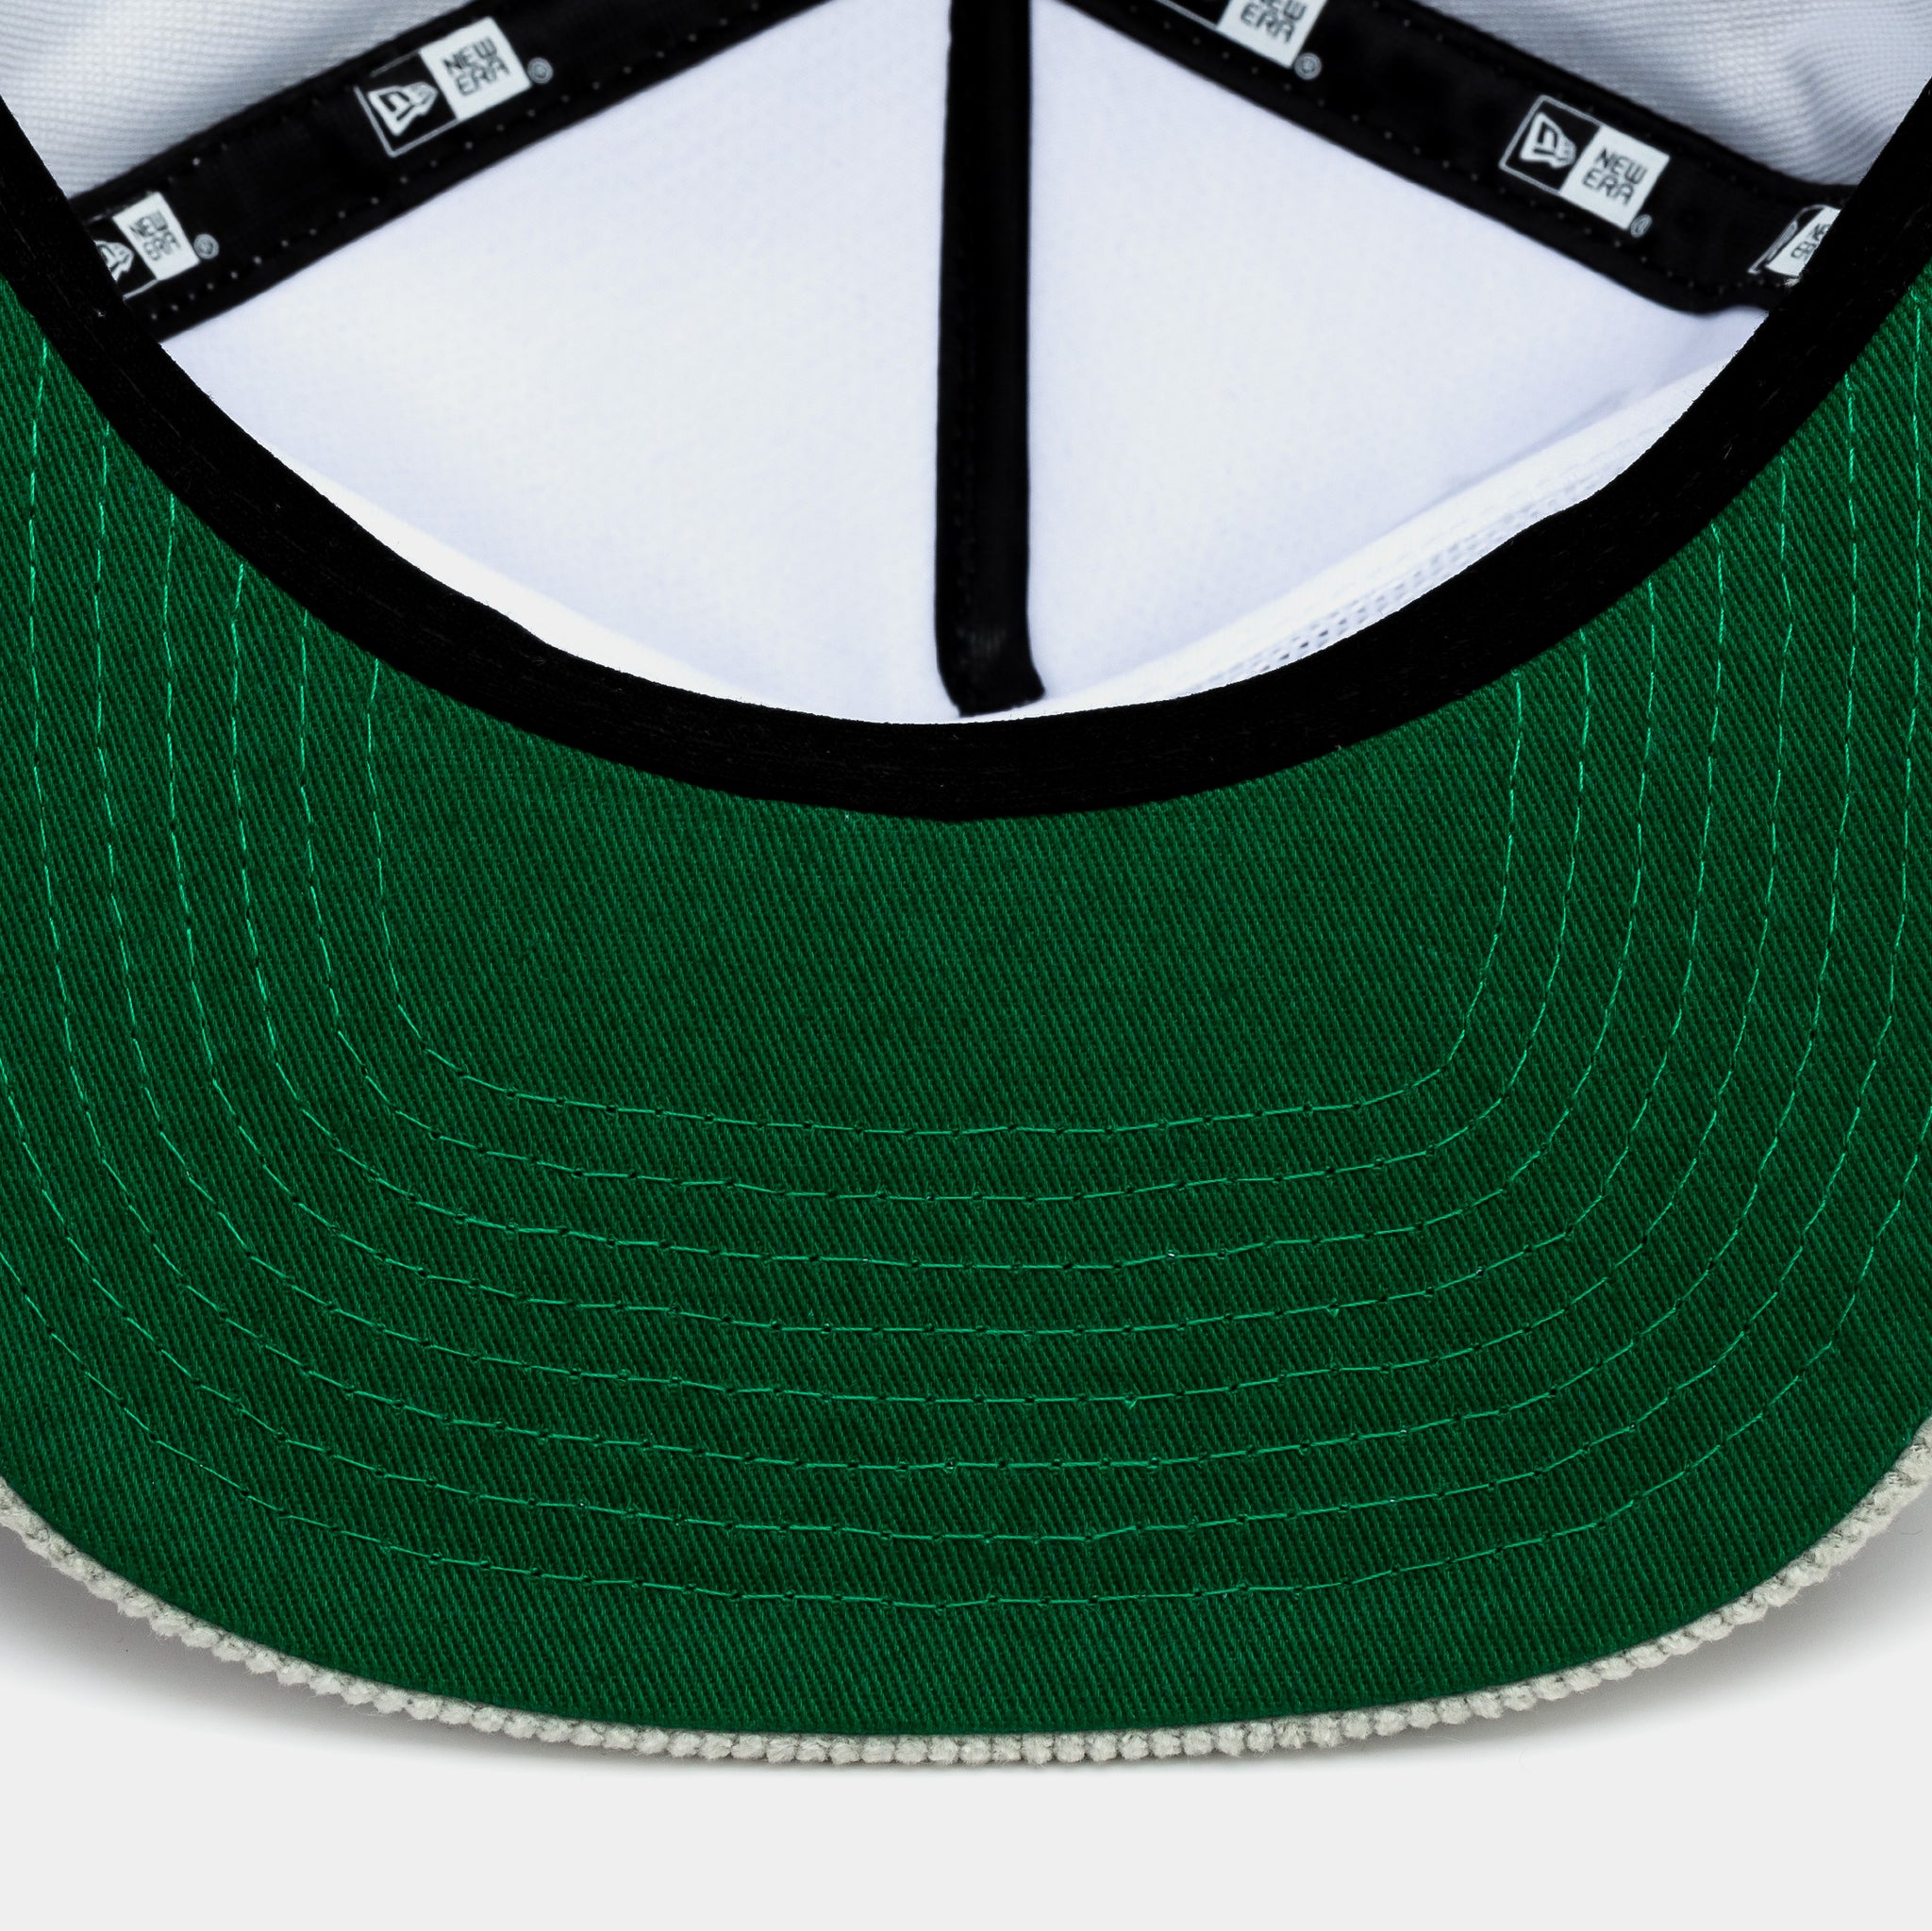 New Era Las Vegas Raiders Corduroy Golfer Snapback Hat